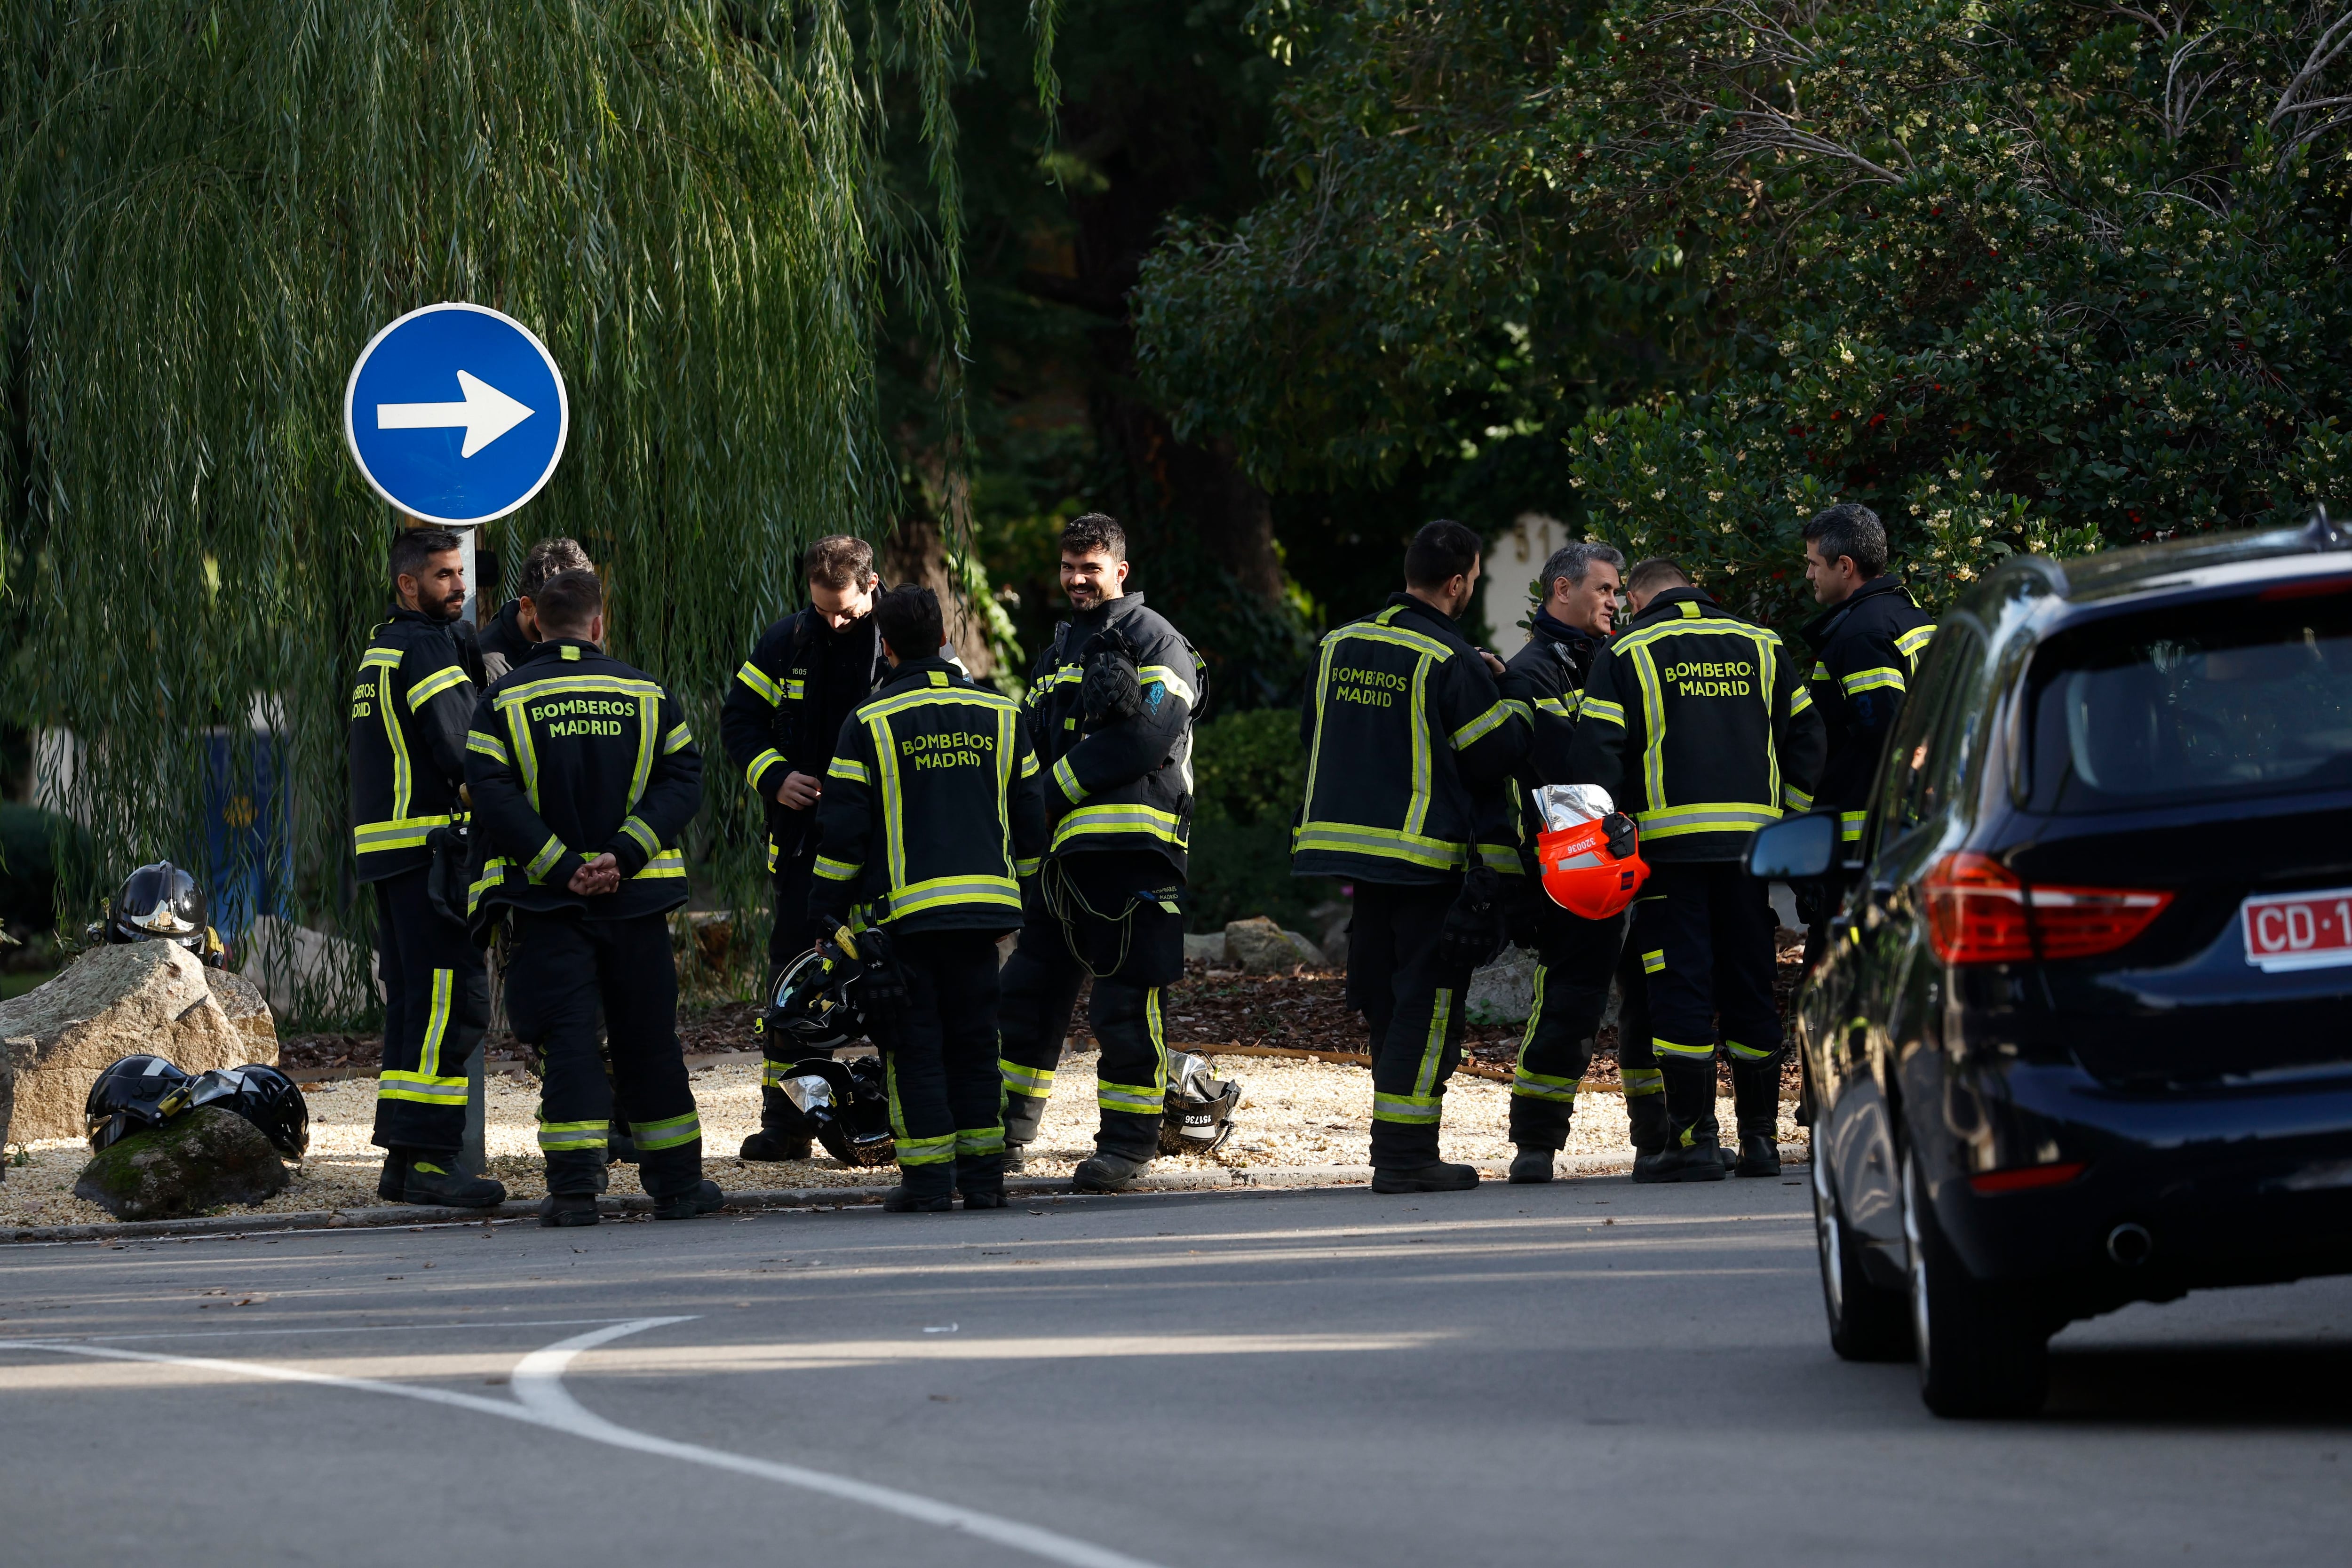 Carta bomba recibida en la embajada de Ucrania en Madrid deja una persona herida